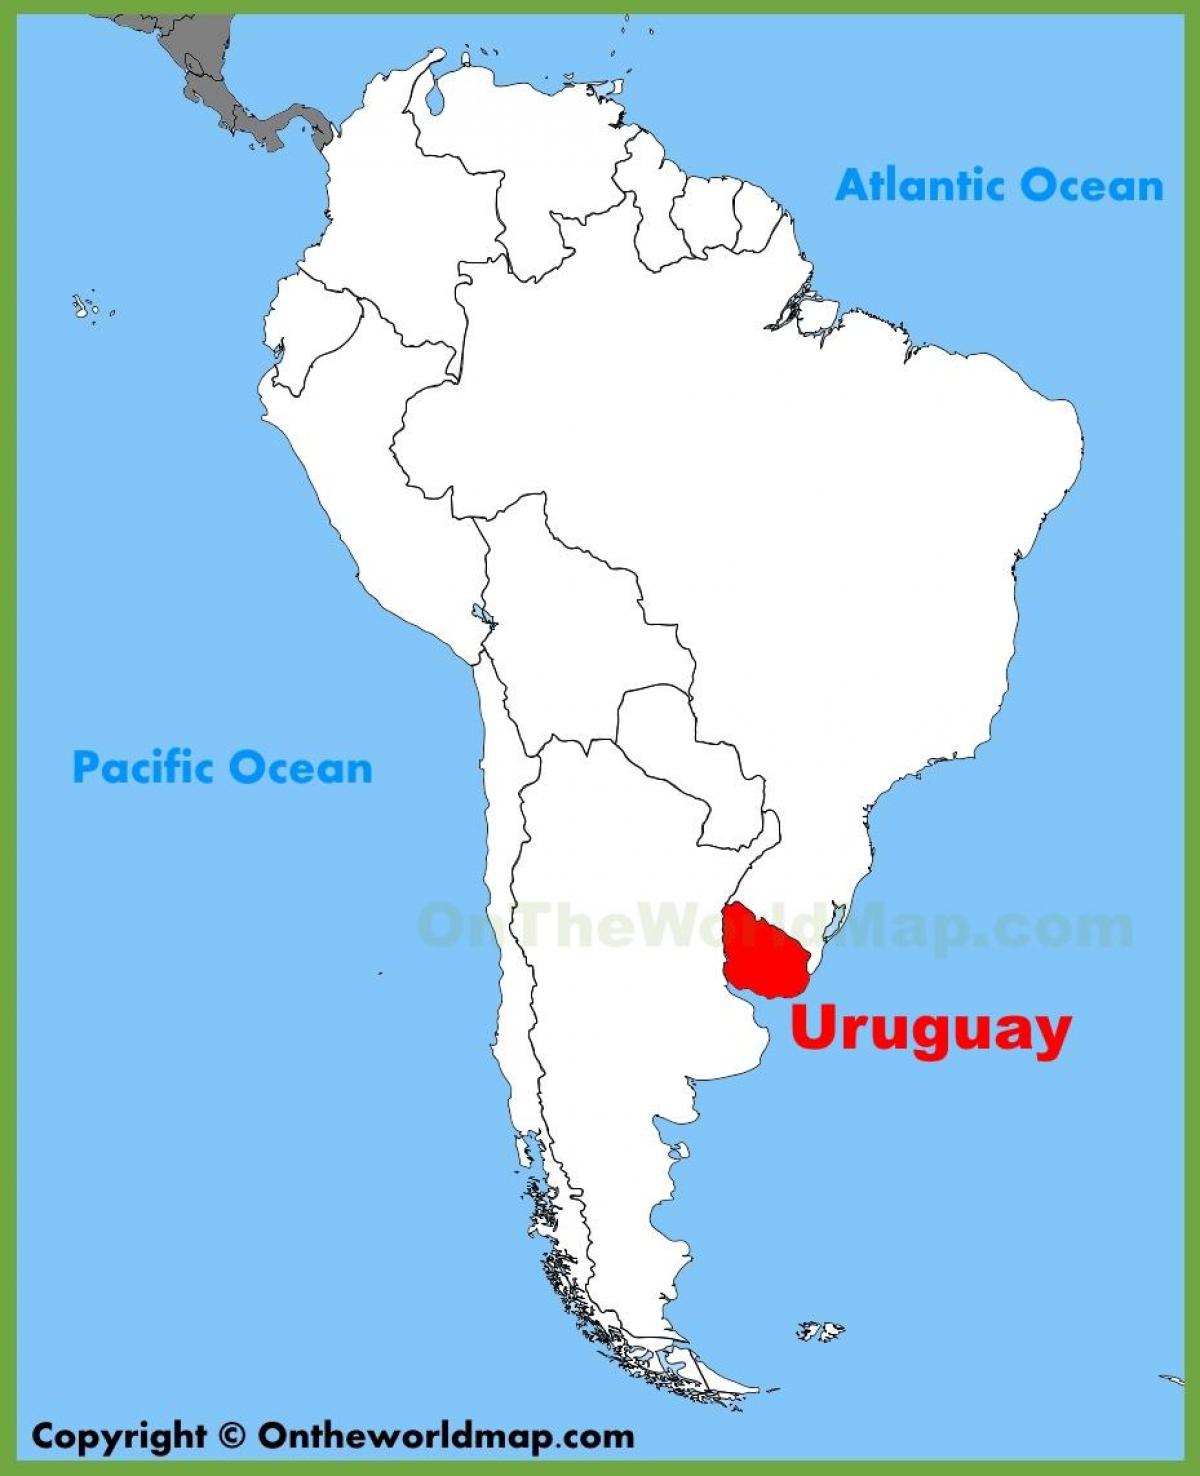 Kort over Uruguay sydamerika